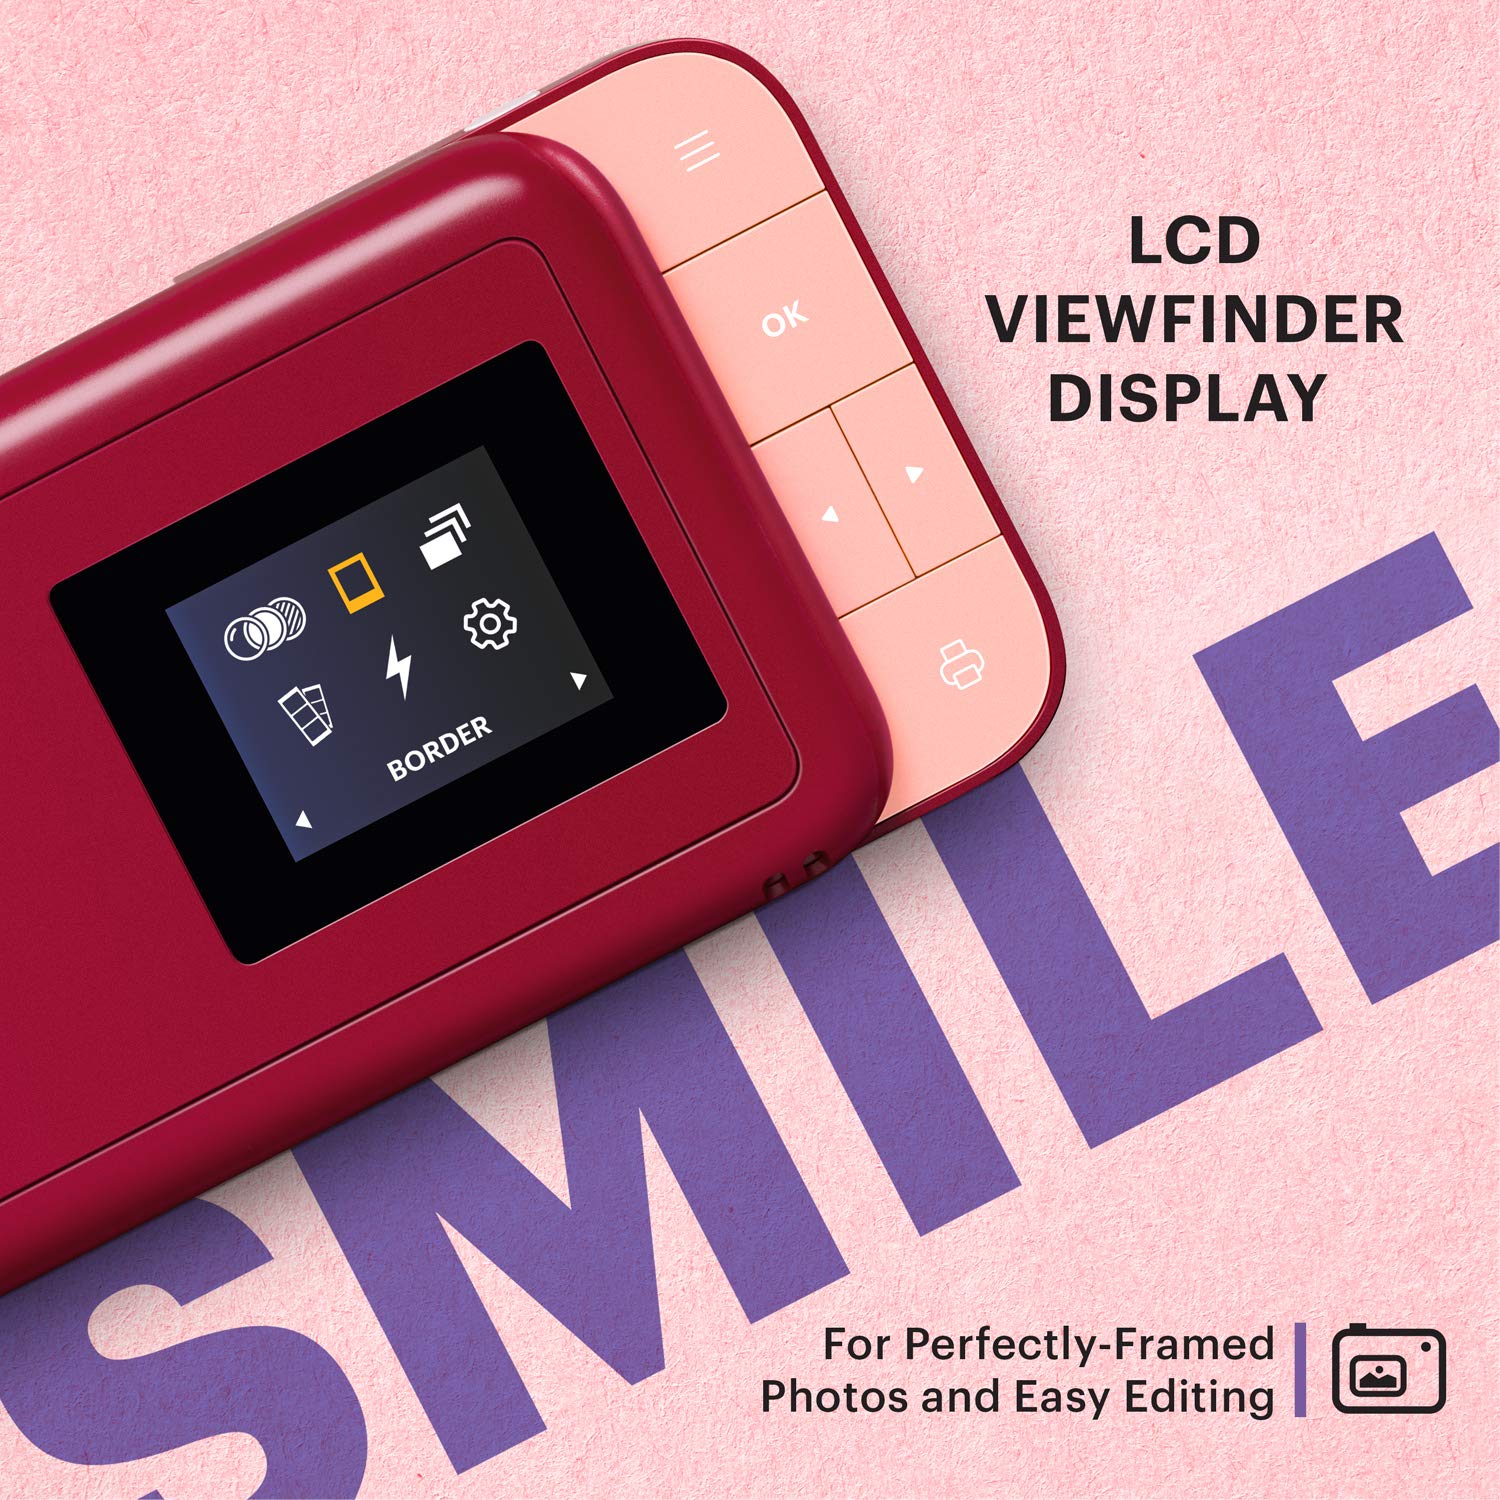 Zink KODAK Smile Instant Print Digital Camera – Slide-Open 10MP Camera w/2x3 ZINK Printer (Red)